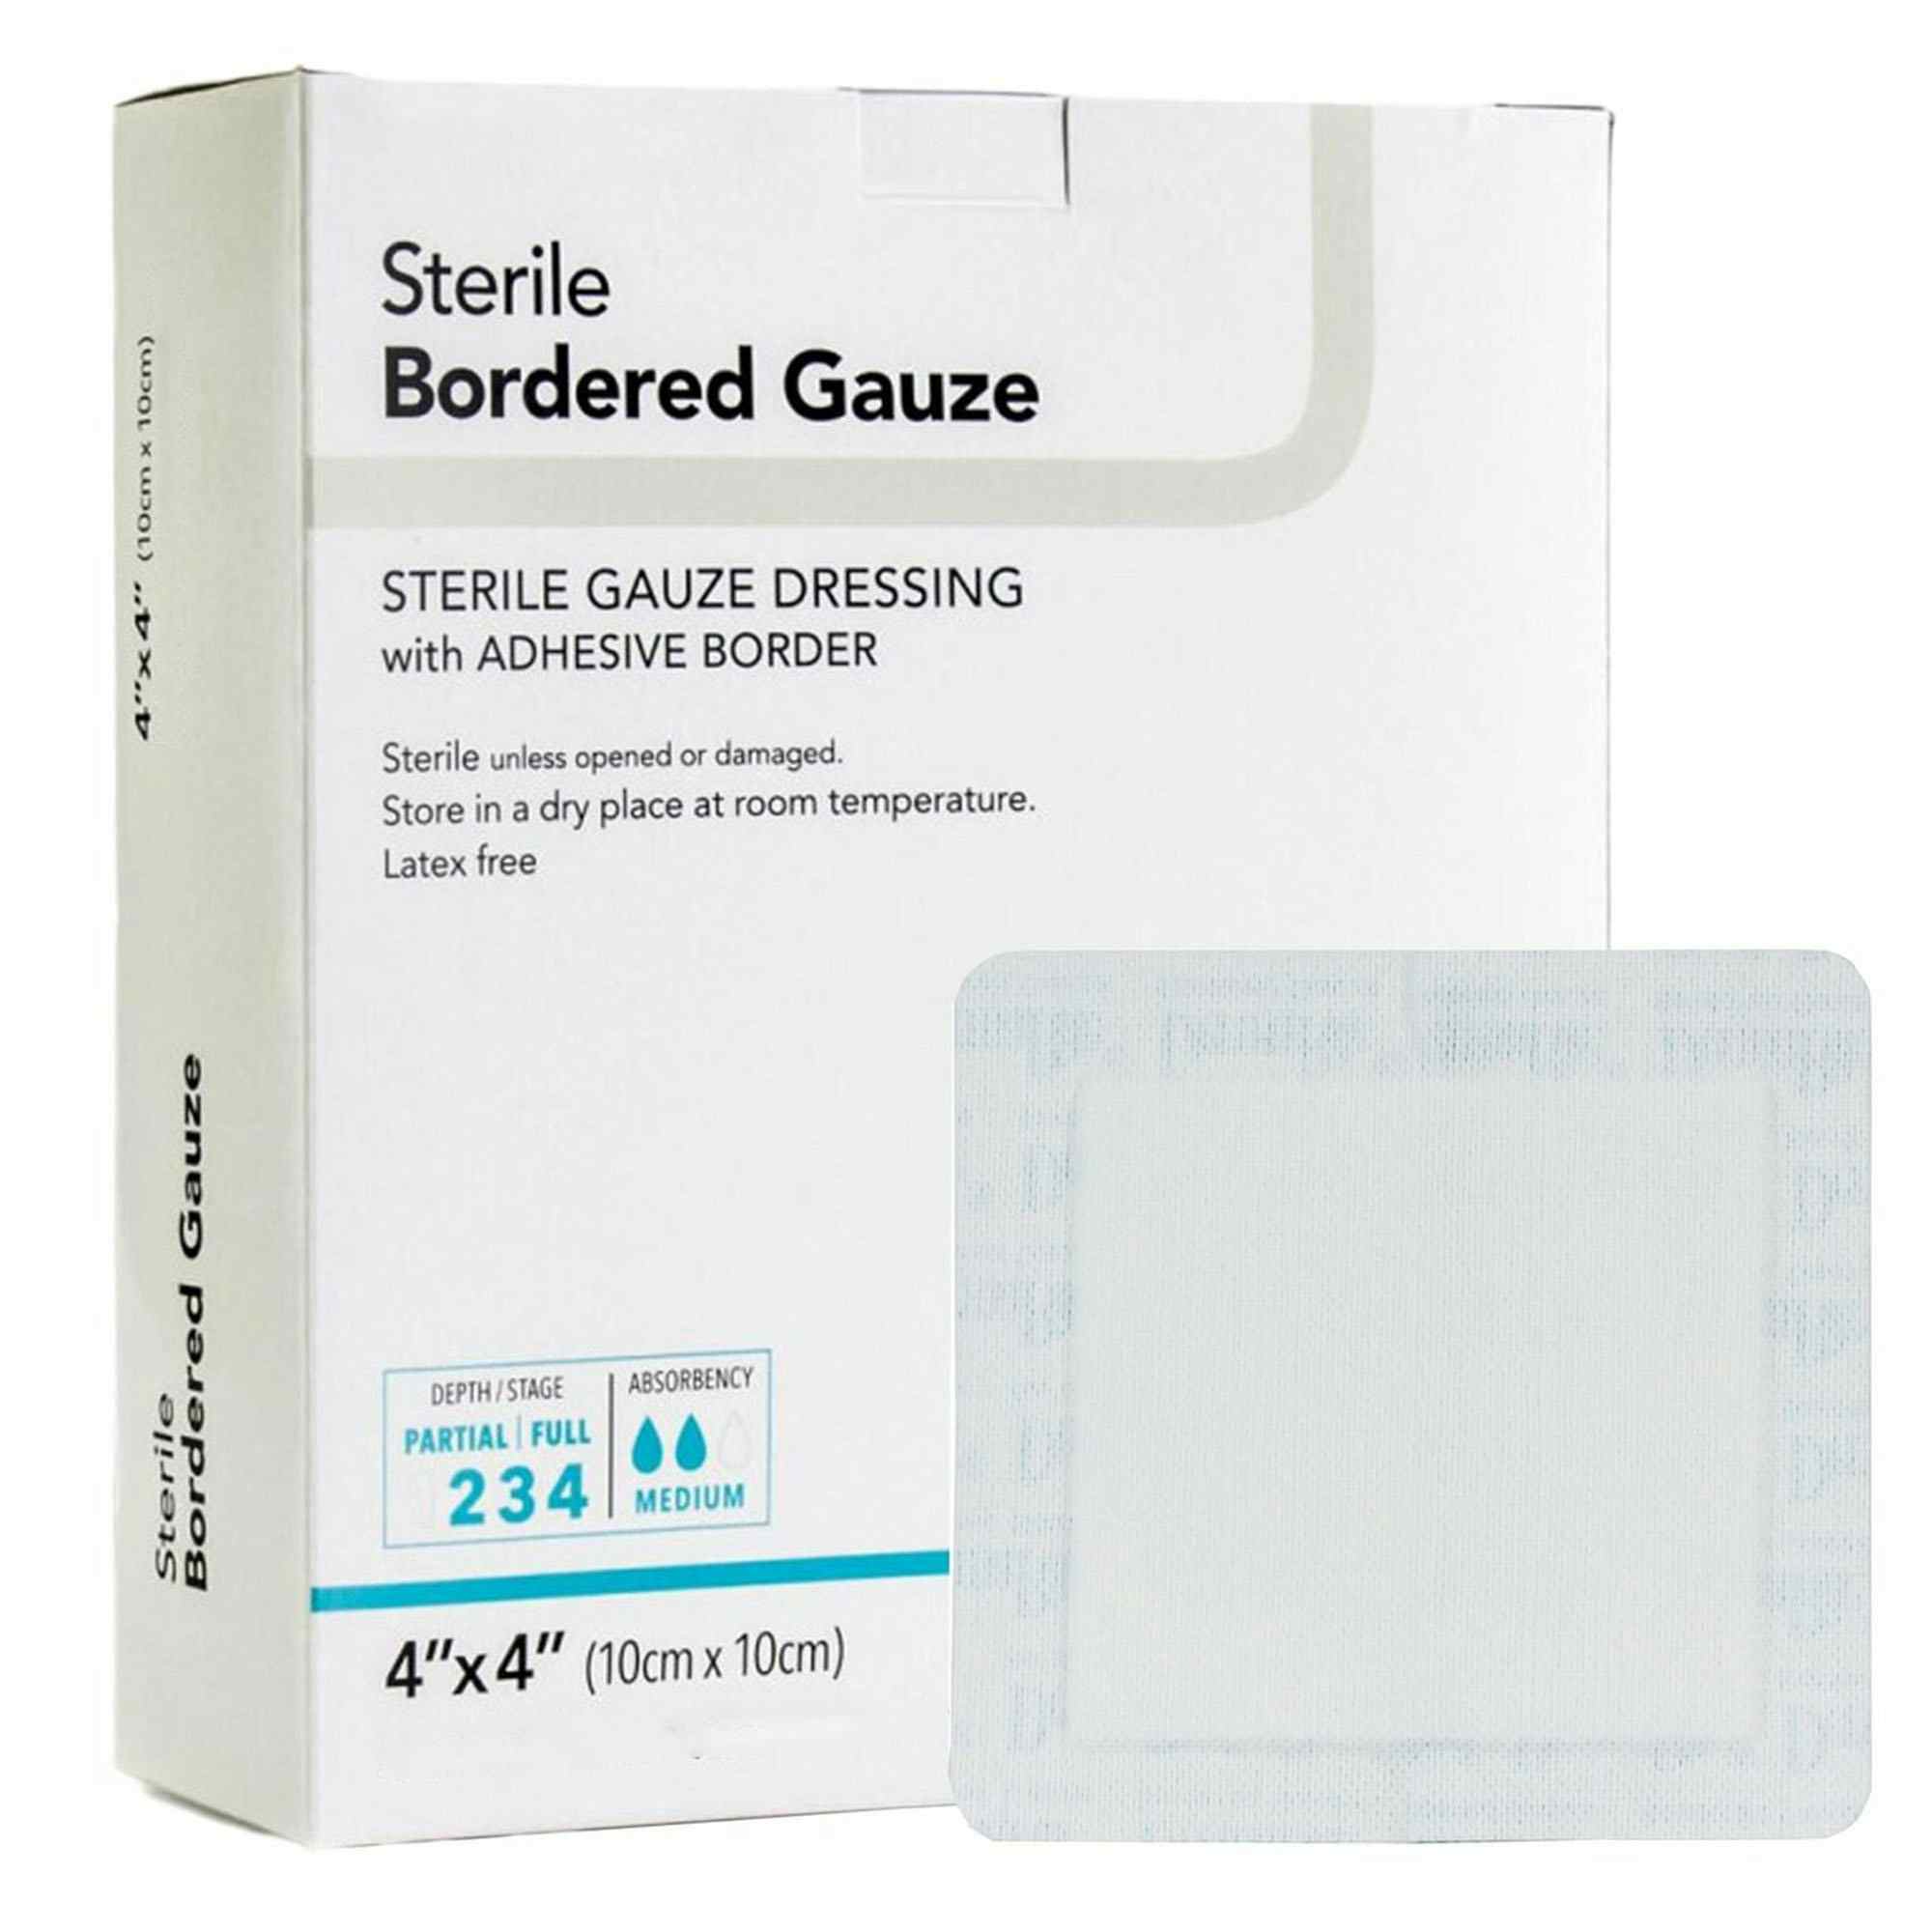 DermaRite Sterile Gauze Dressing with Adhesive Border, 4 X 4"